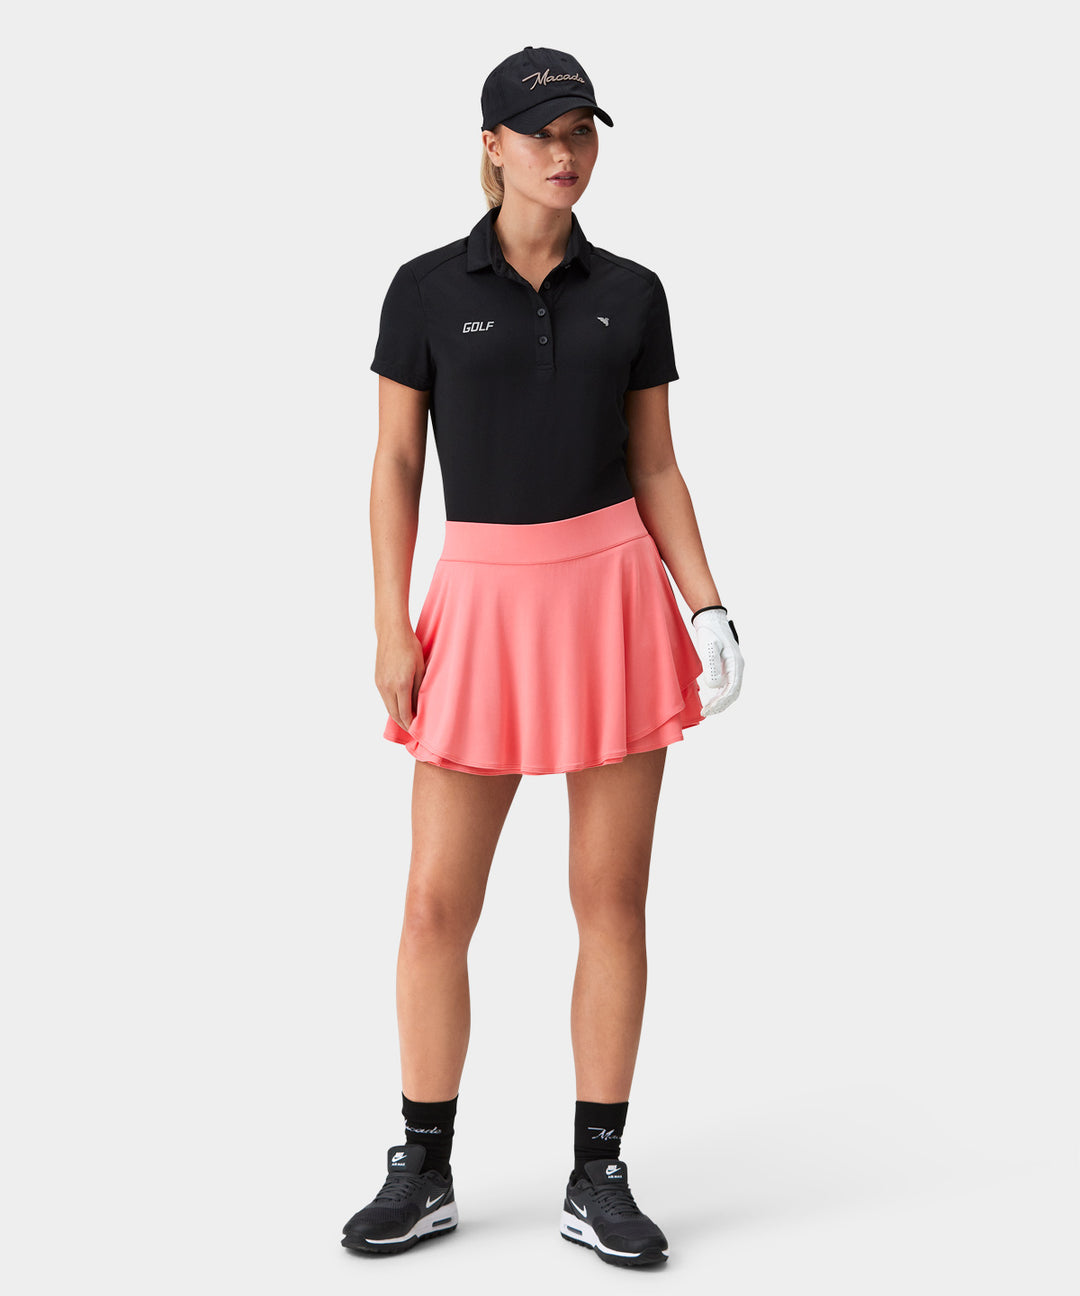 Cleo Peach Tour Skirt Macade Golf